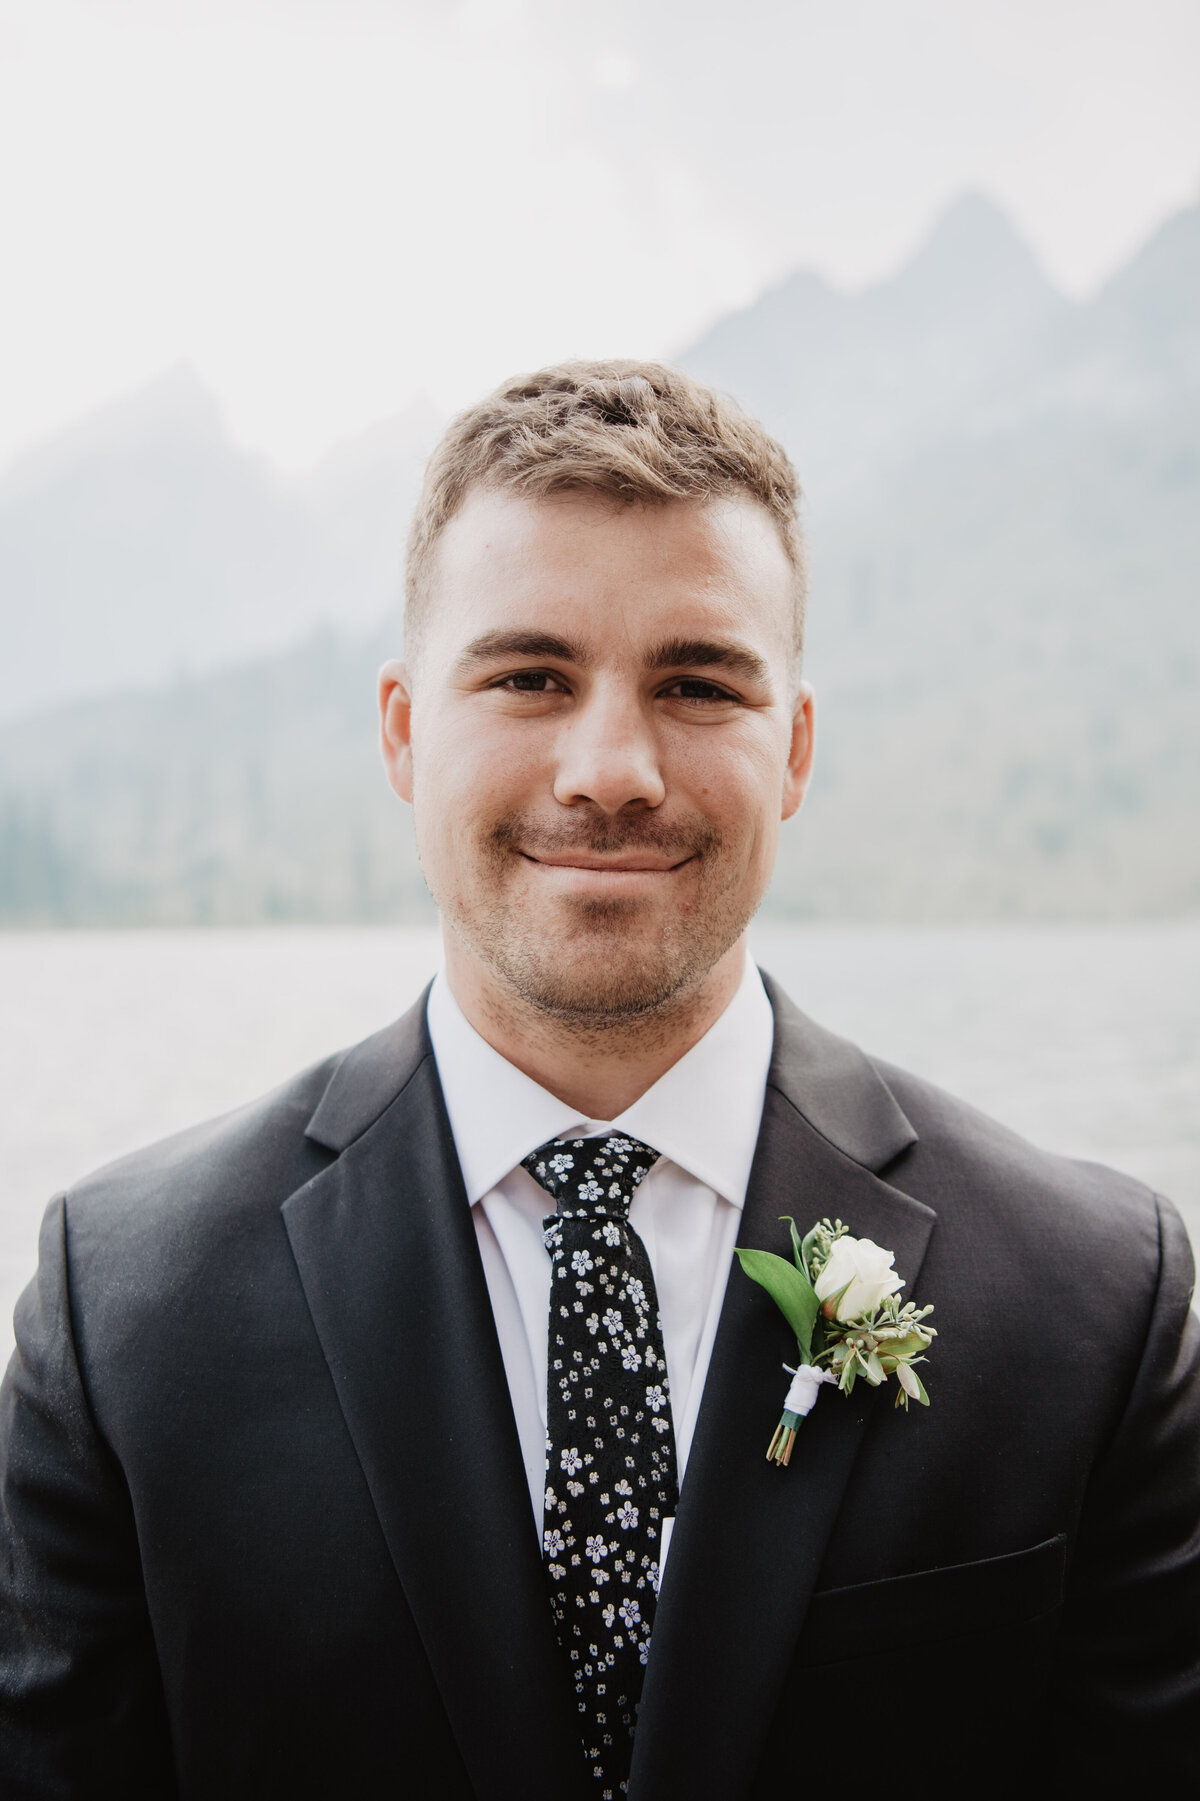 Jackson Hole Photographers capture groom portraits in Grand Teton